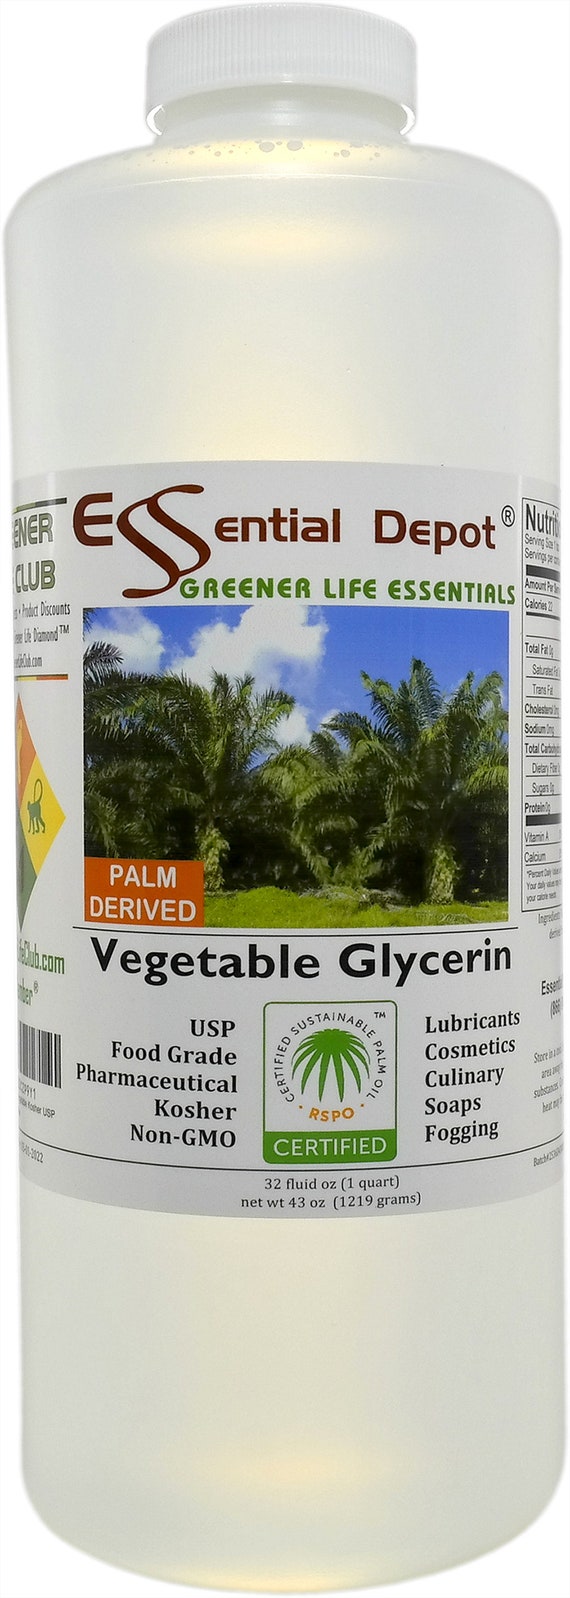 Non-GMO Vegetable Glycerin Food Grade USP Palm Fruit Based